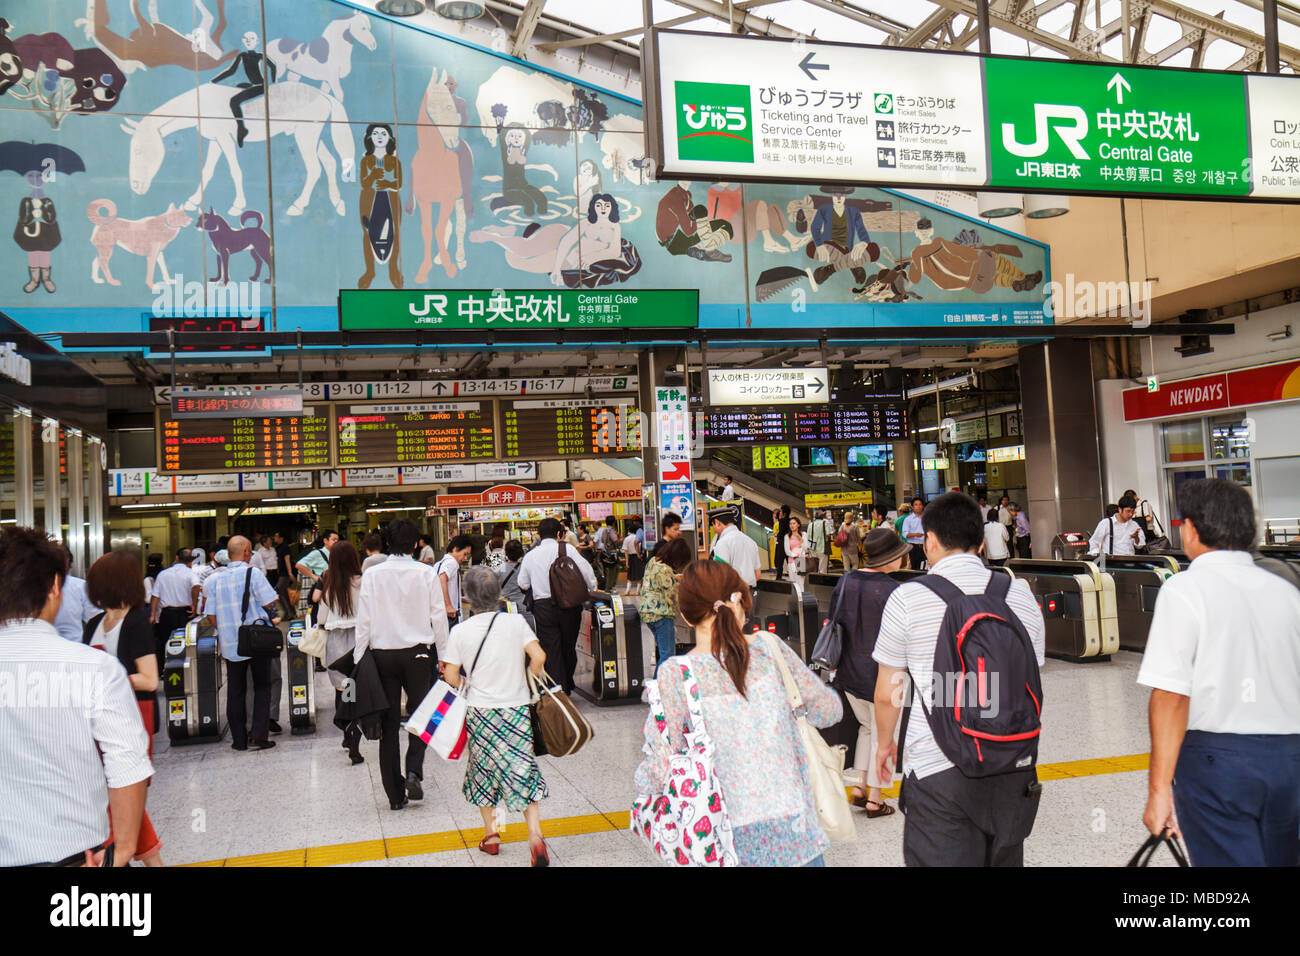 Tokyo Japan,Asia,Orient,Ueno,JR Ueno Station,train,subway,train,train,kanji,Japanese English,characters,symbols,sign,logo,mural,commuters,passenger pa Stock Photo